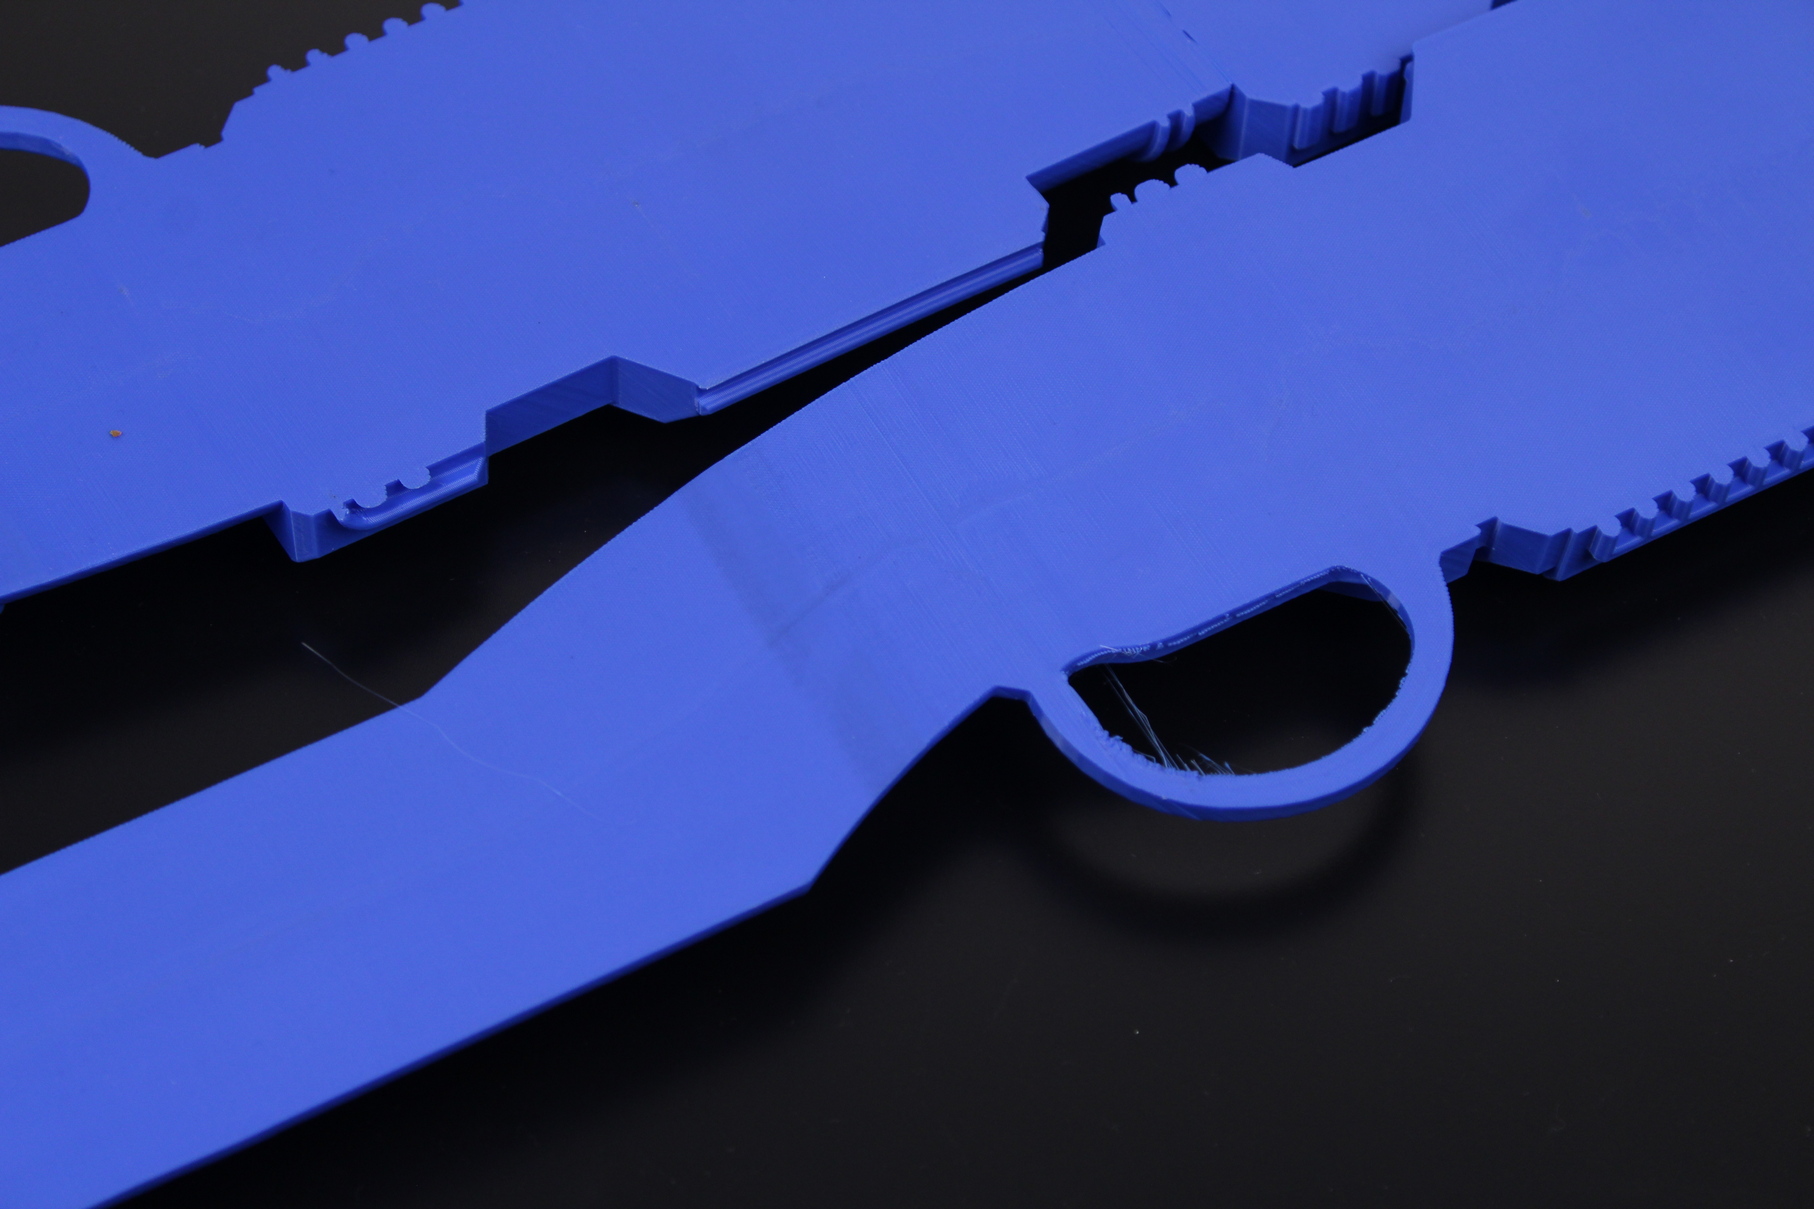 Mandalorian Rifle printed on the CR 30 3DPrintMill 4 | Creality 3DPrintMill (CR-30) Review: Belt Printer for Batch 3D Printing